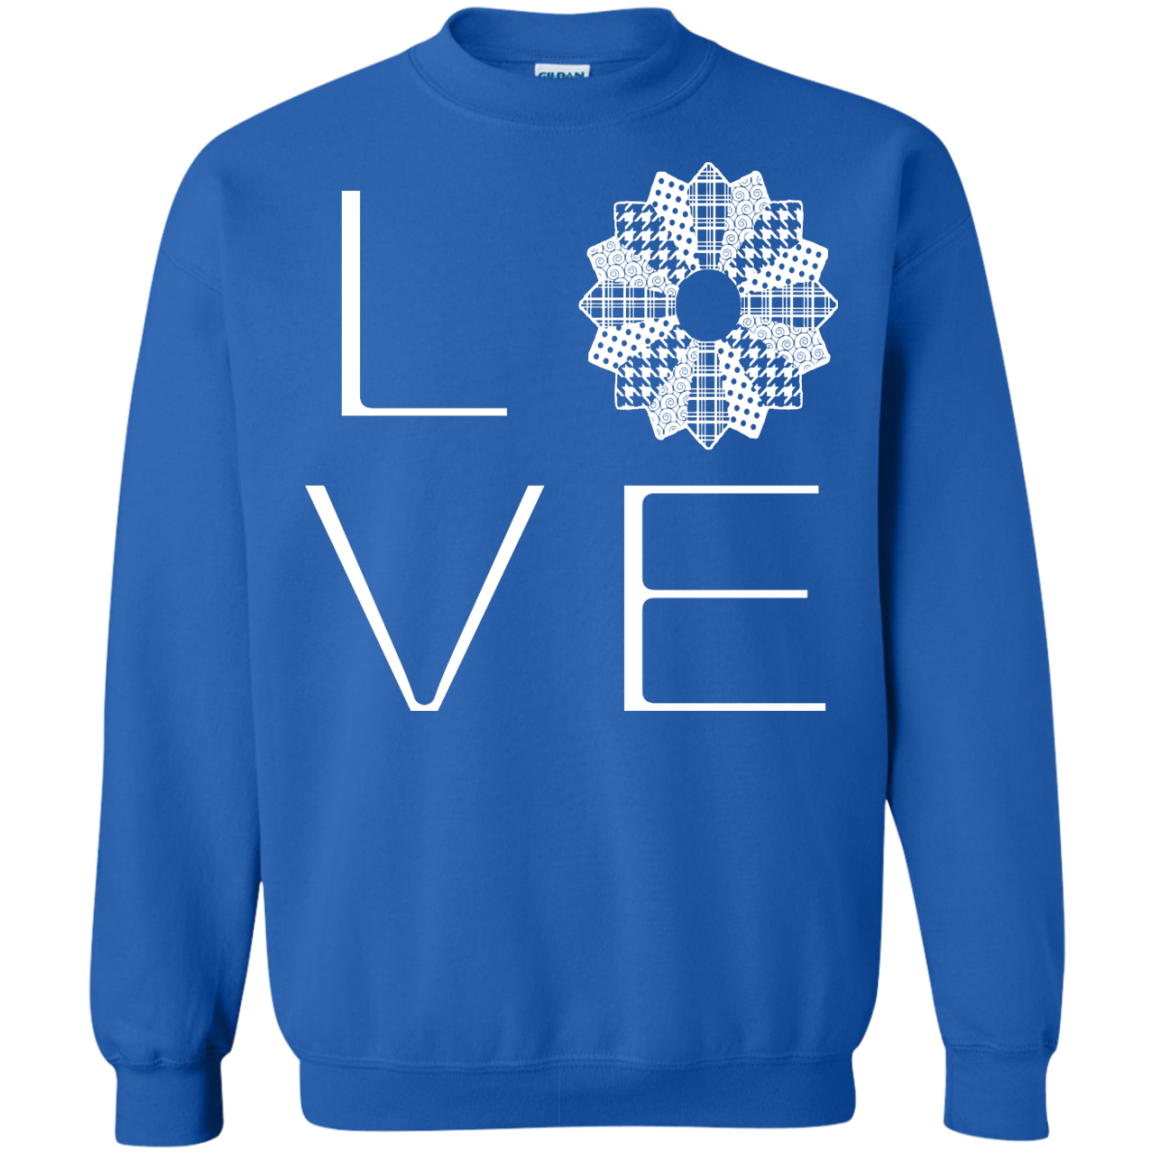 LOVE Quilting Crewneck Sweatshirts - Crafter4Life - 6